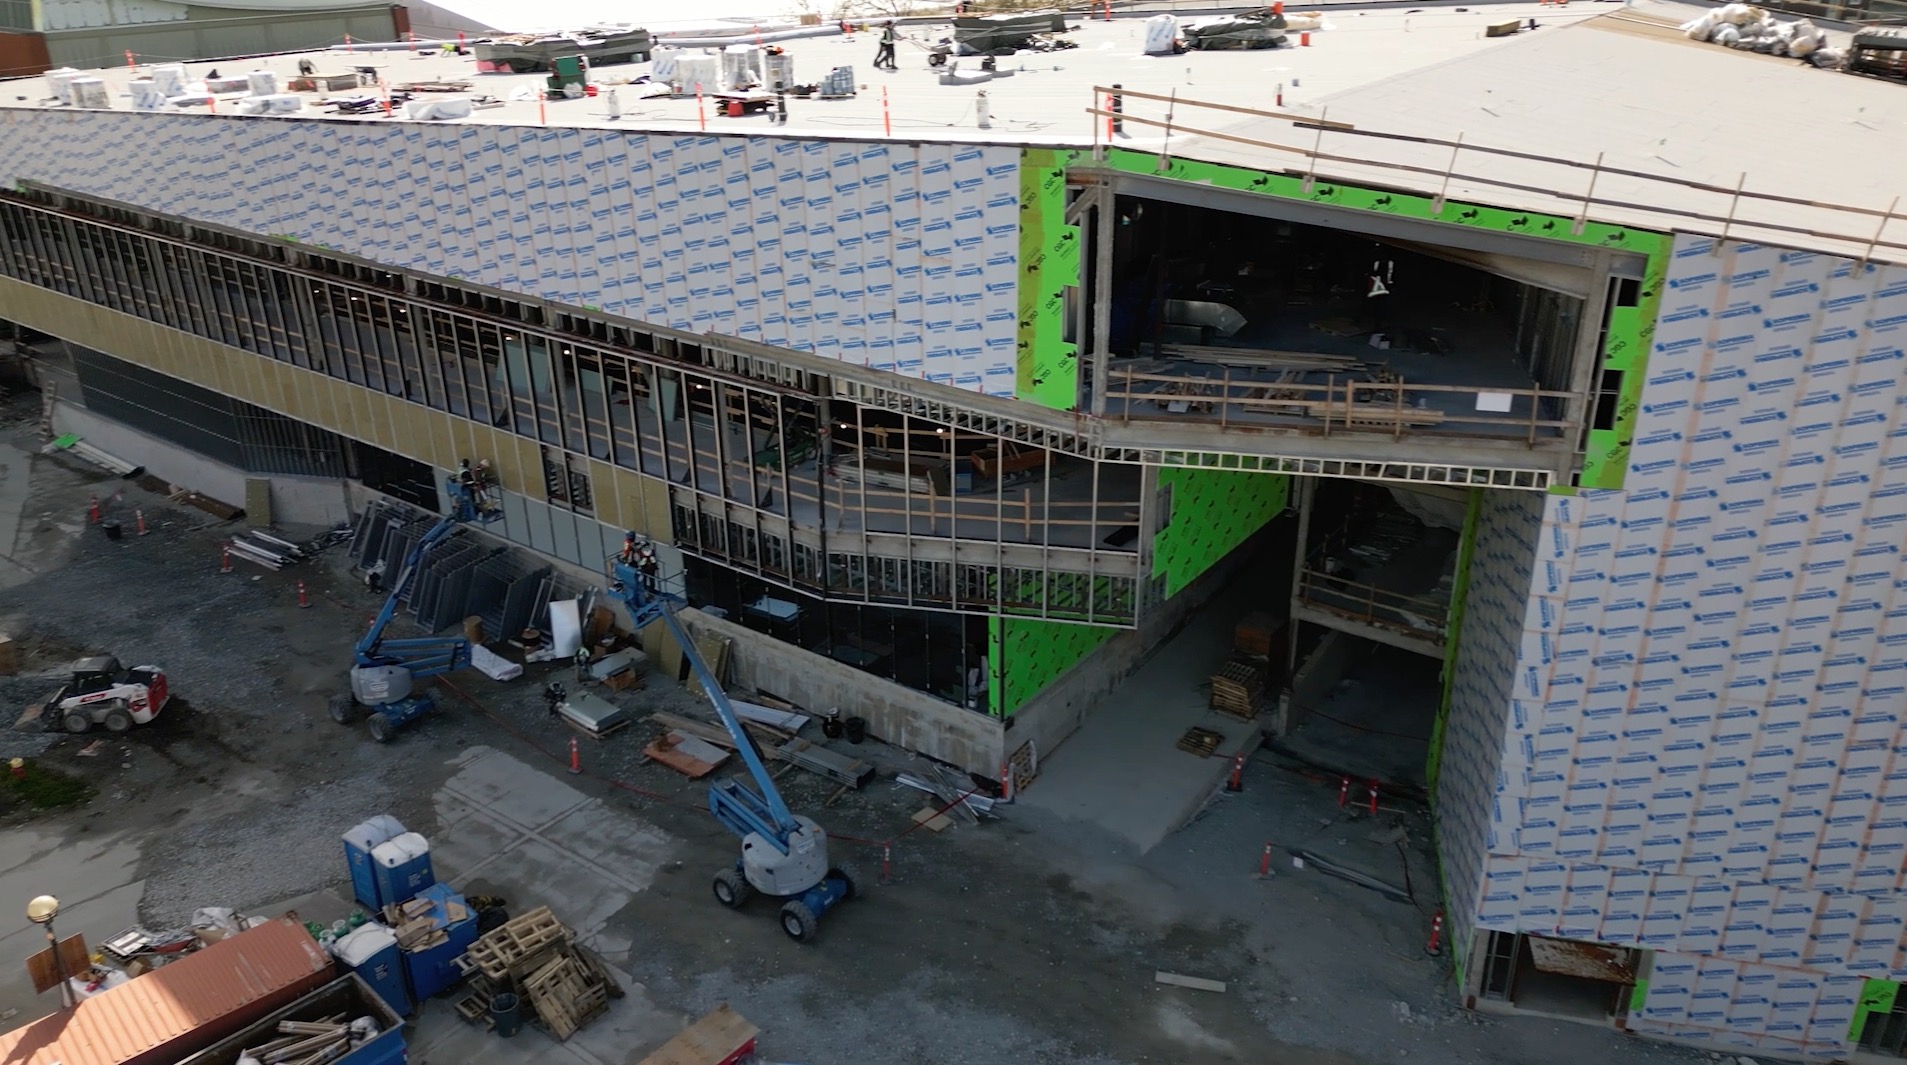 Progress Update on the UBC Rec Center Project